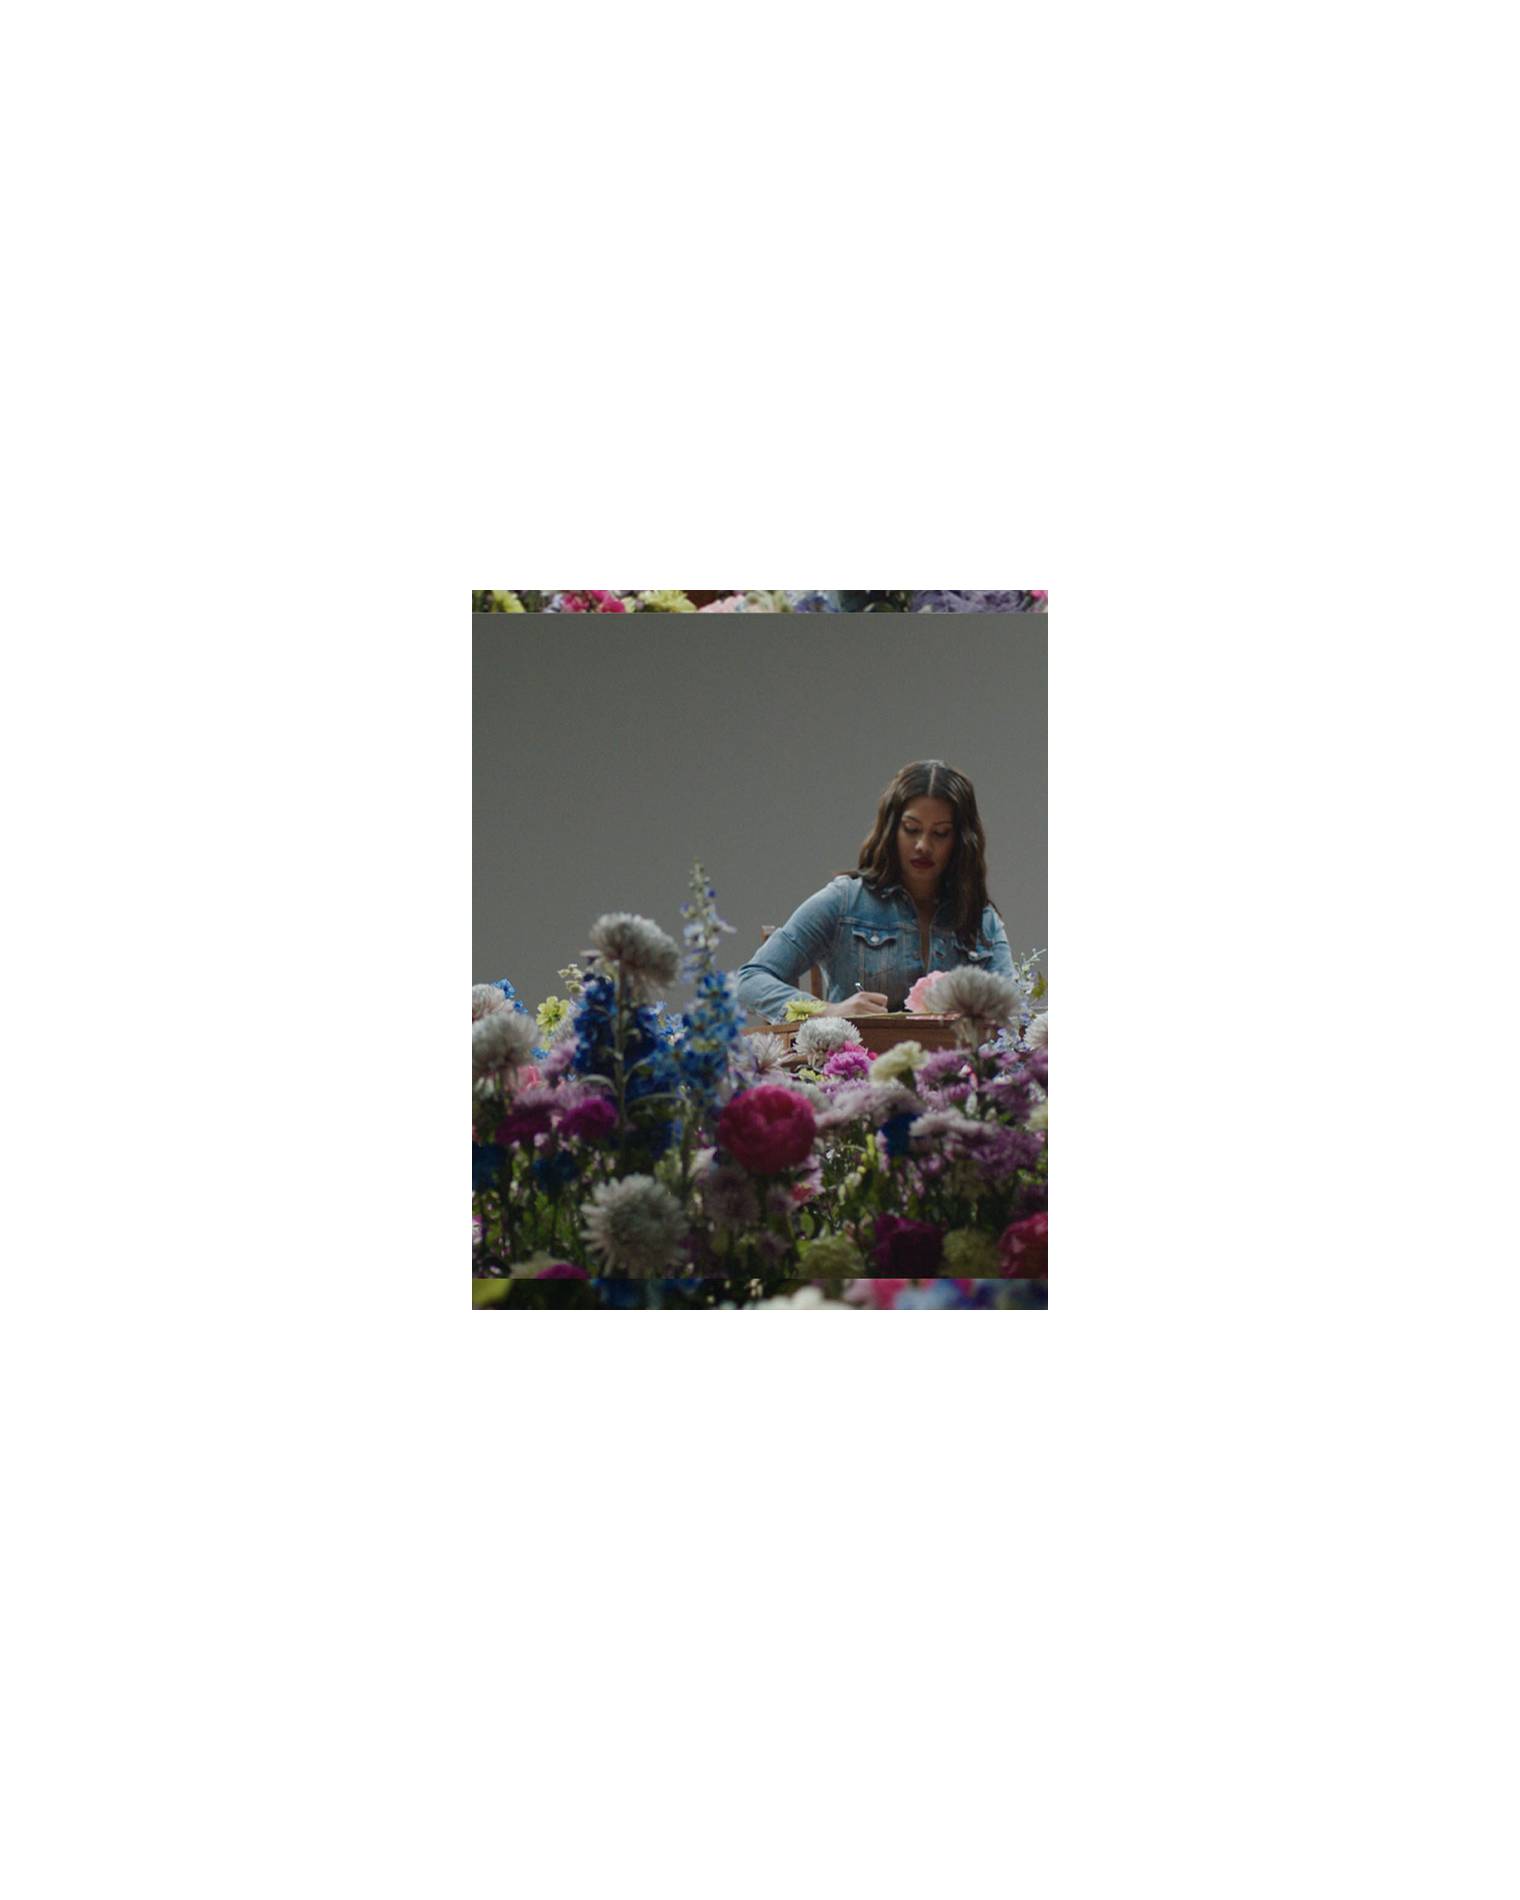 Leyna bloom sitting in flowers